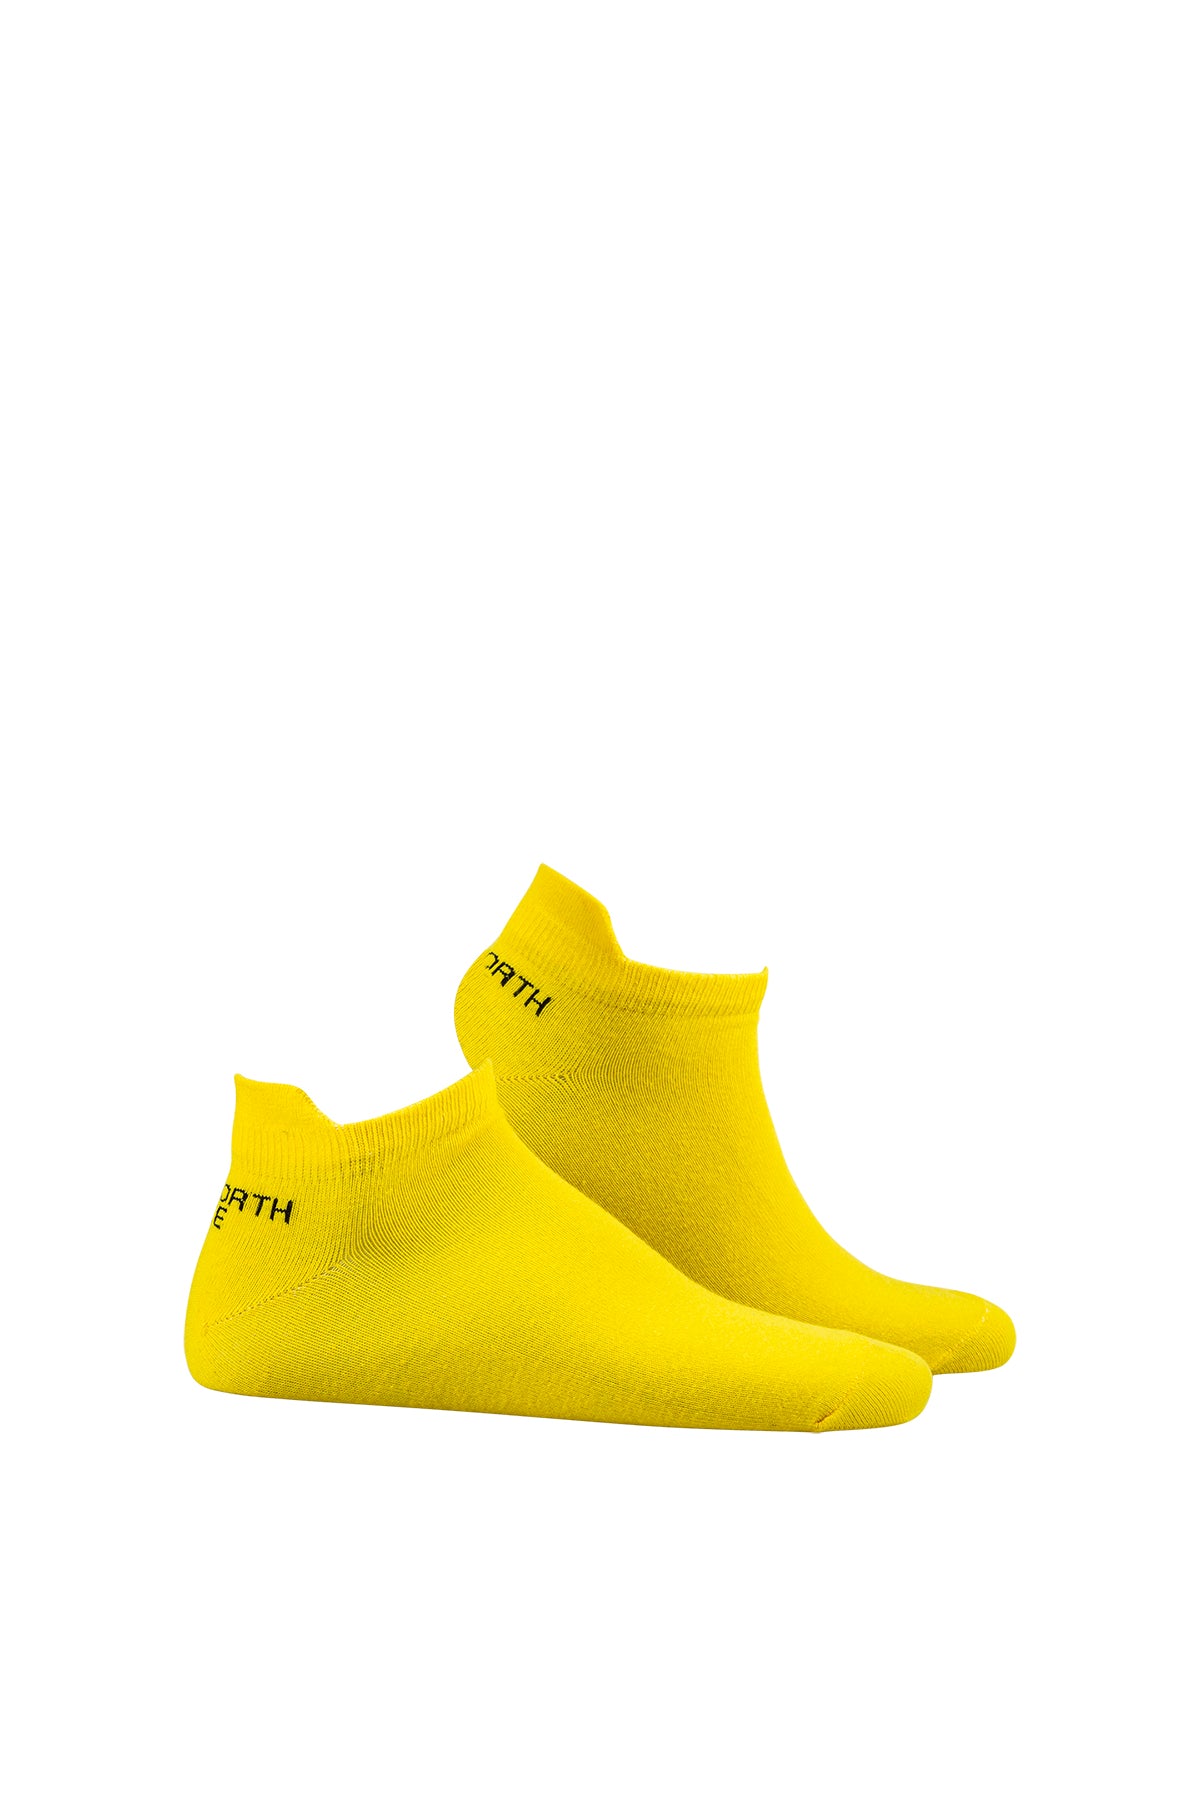 Wholesale Thermal Unisex Socks for Men & Women Army Grade Fleece Thermal Socks - Yellow